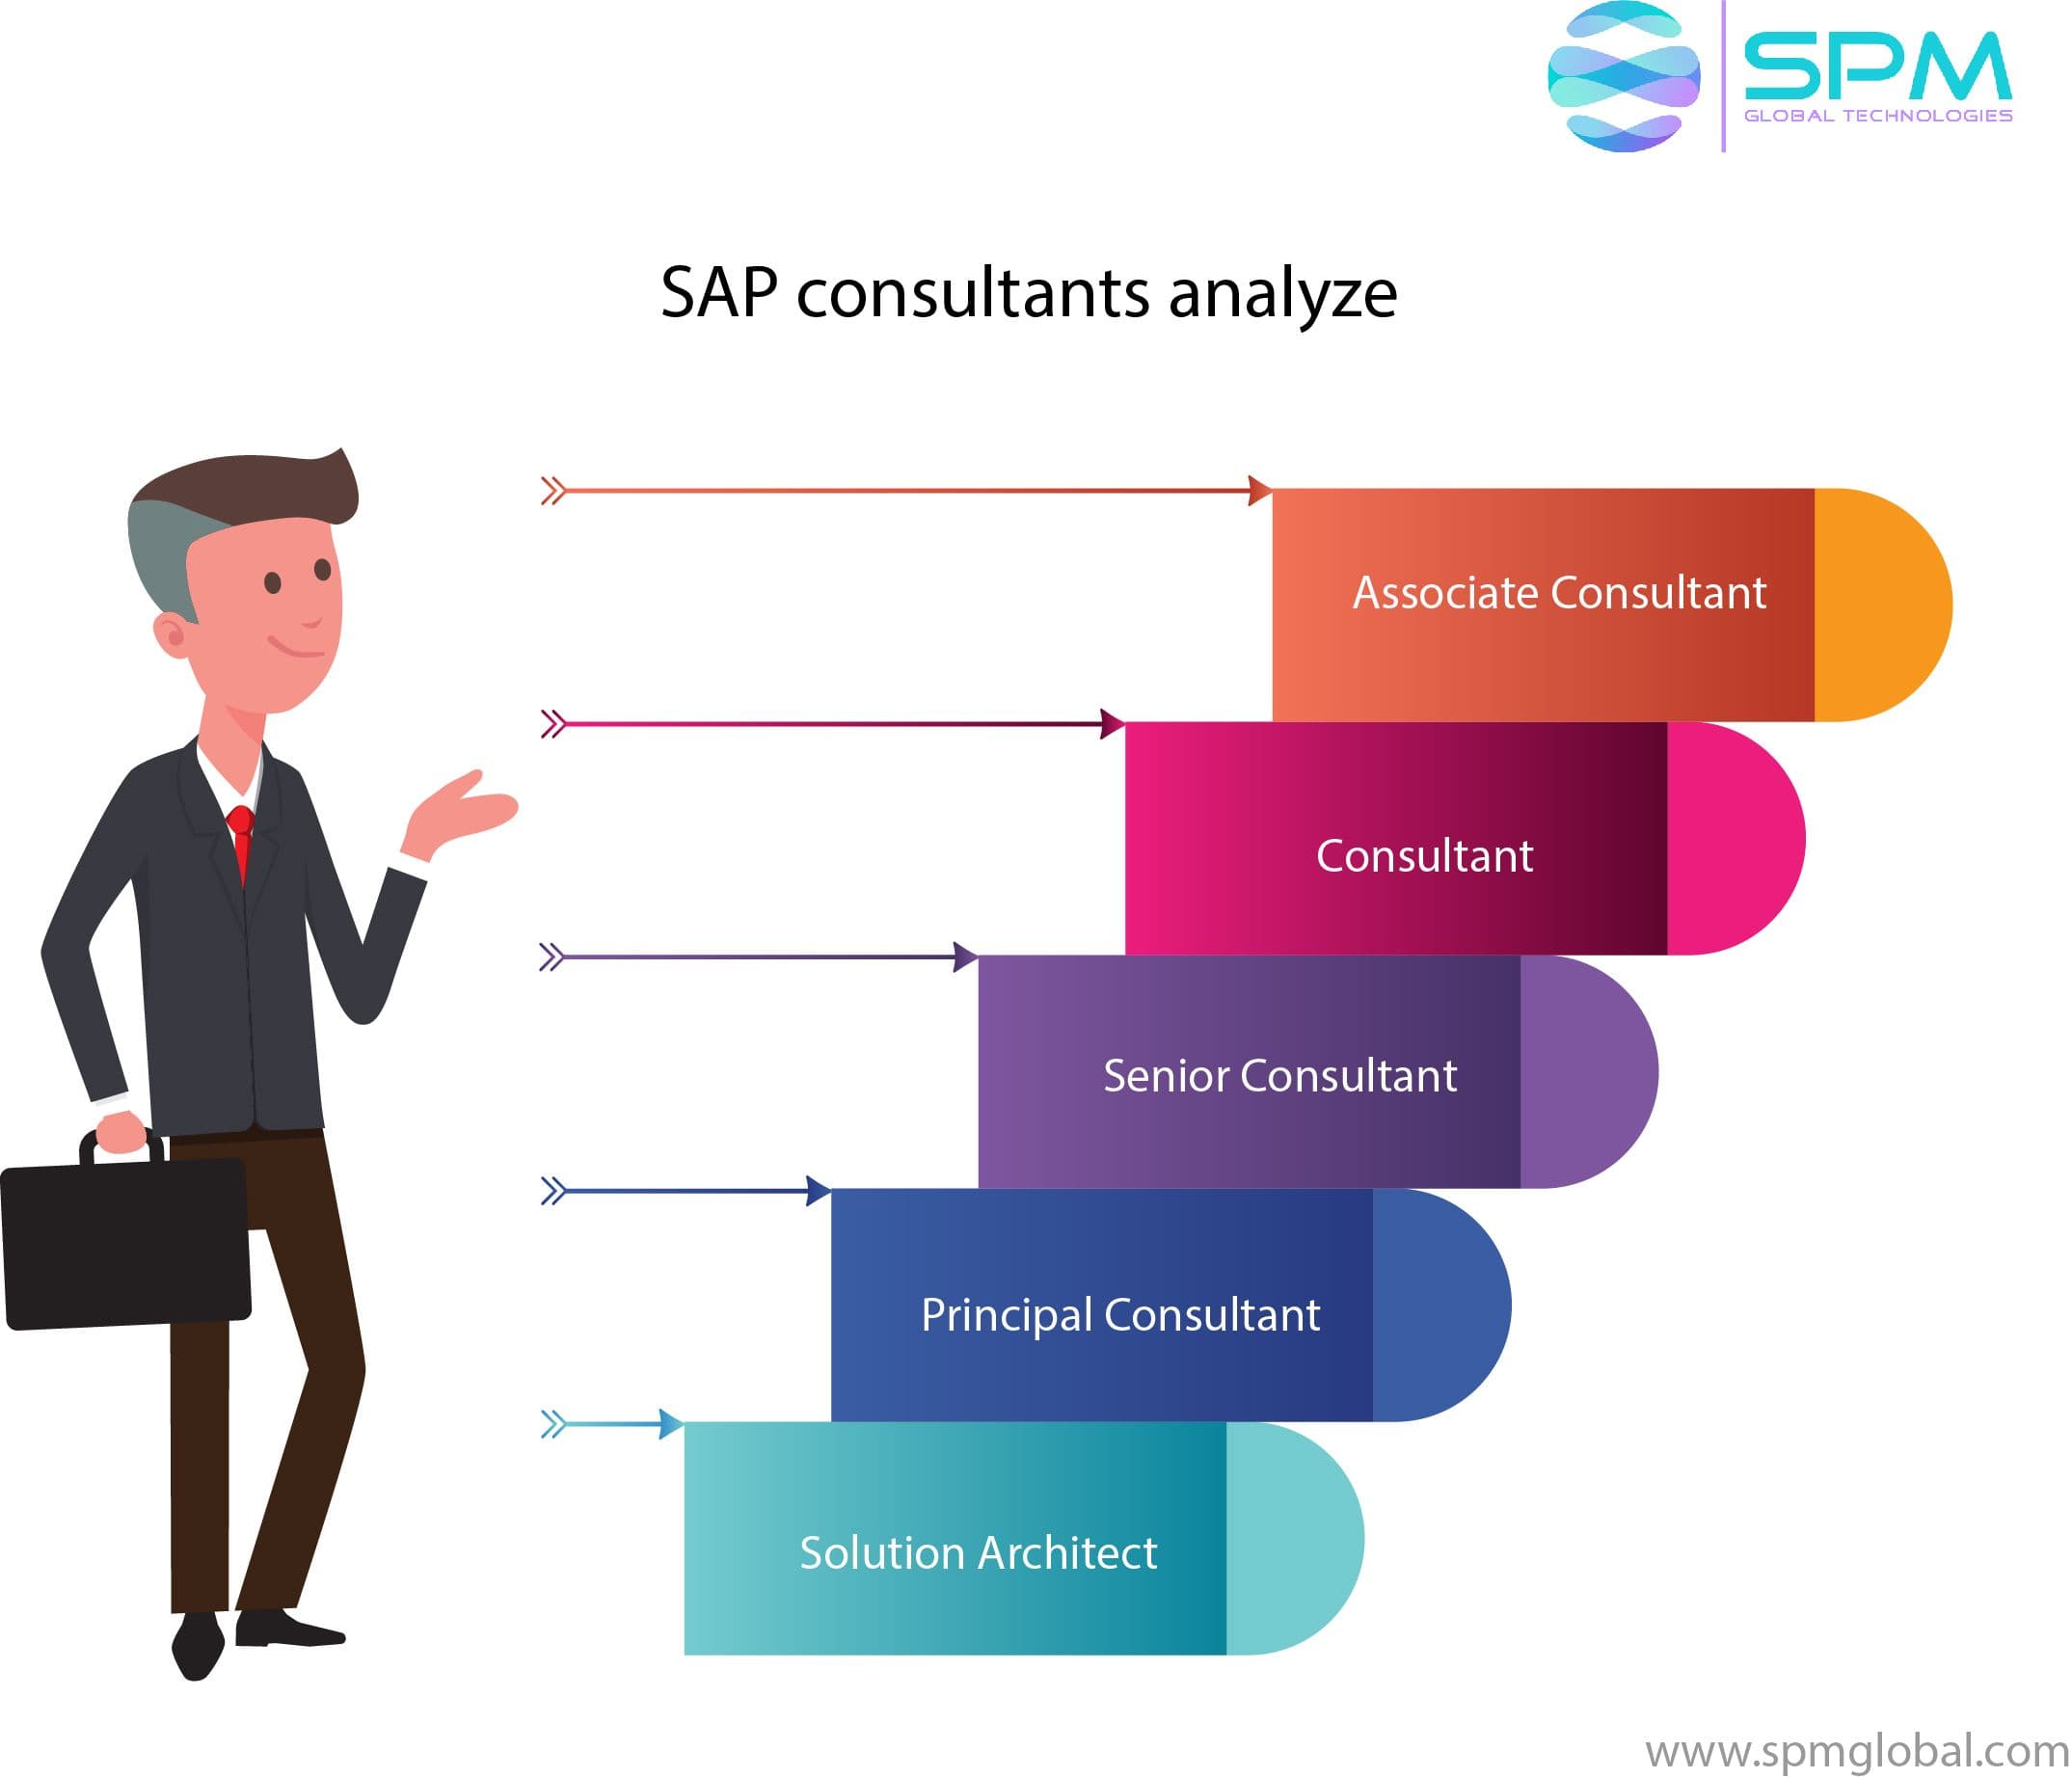 SAP Customer Relationship Management application